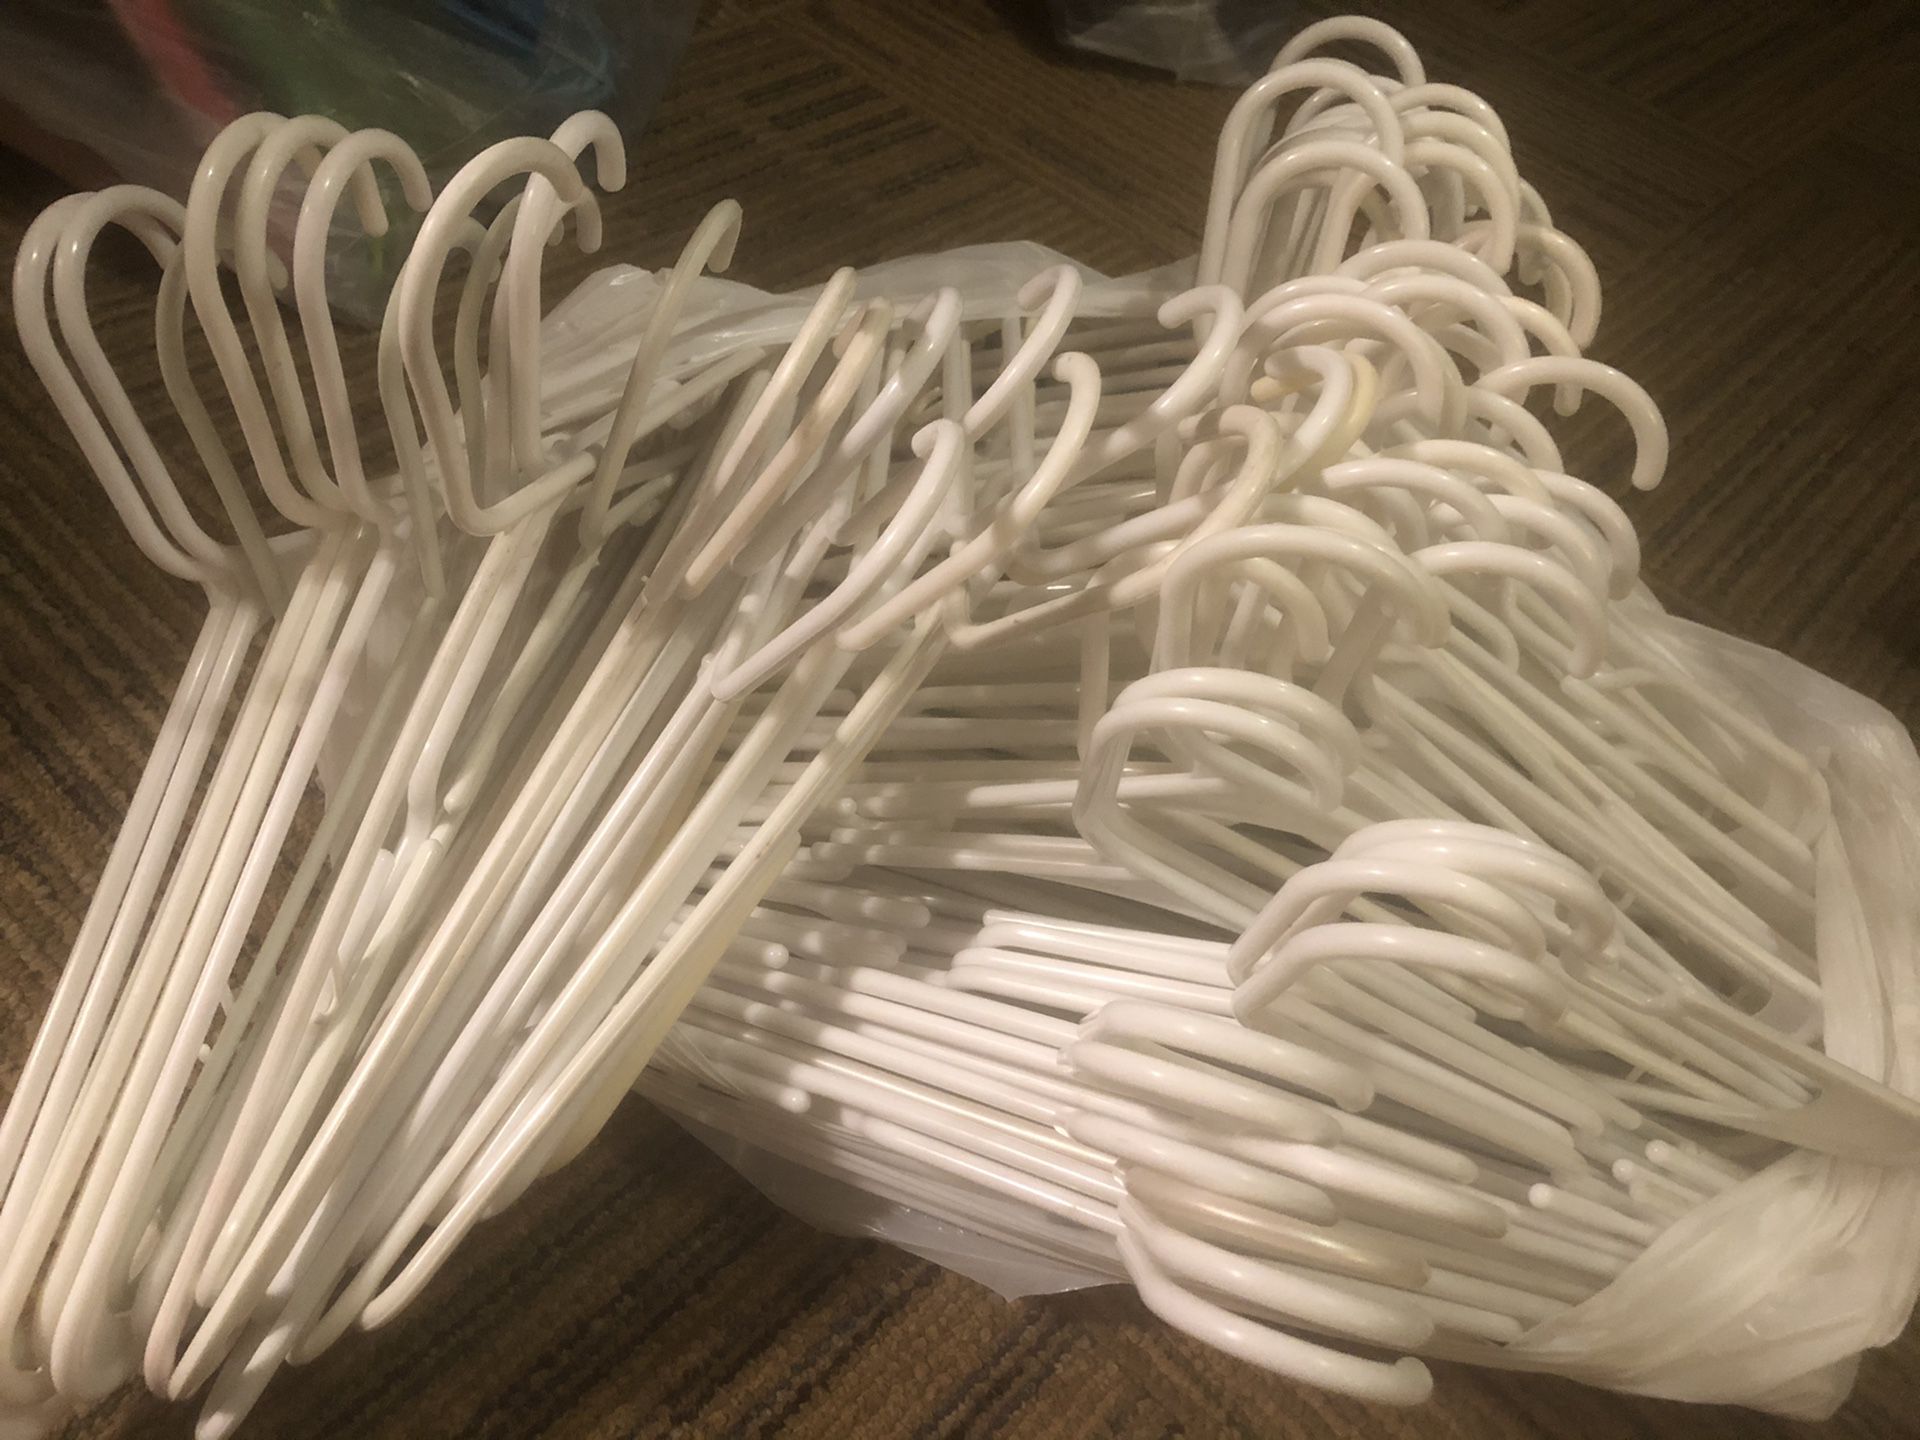 Free white plastic hangers